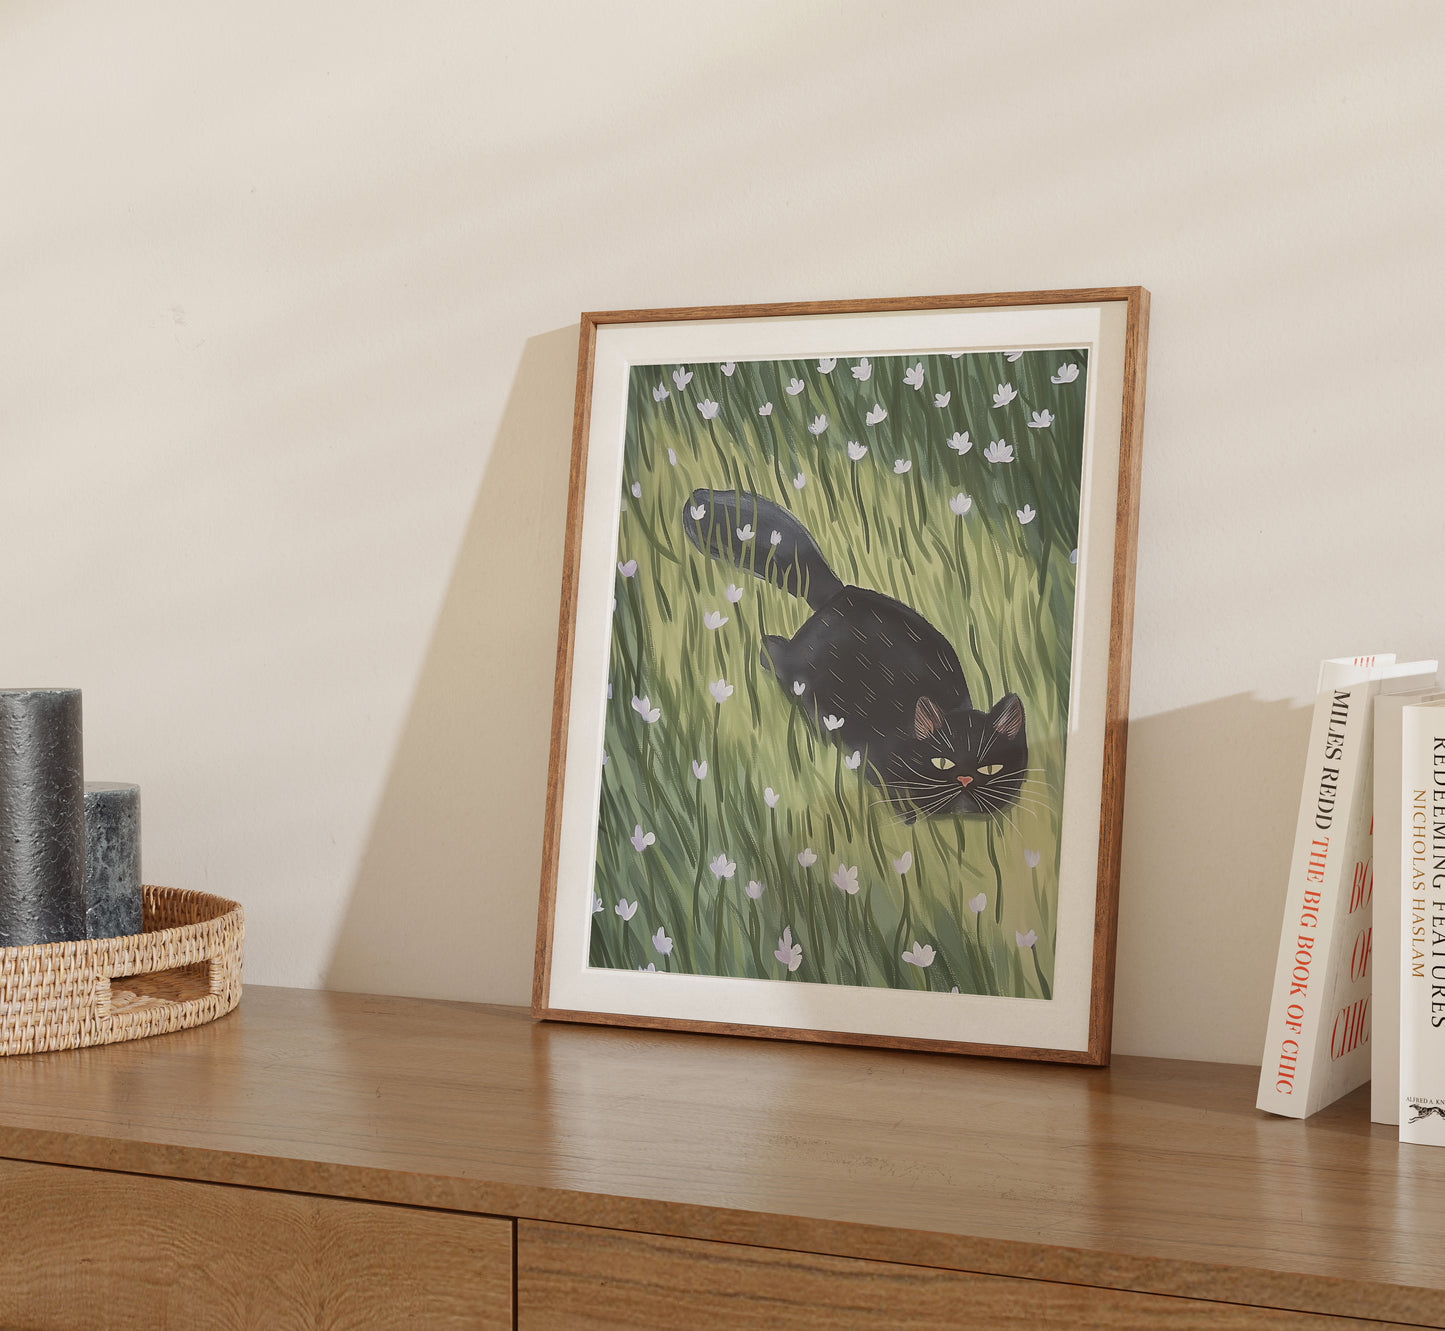 Framed illustration of a black cat in tall grass on a wooden shelf beside books.